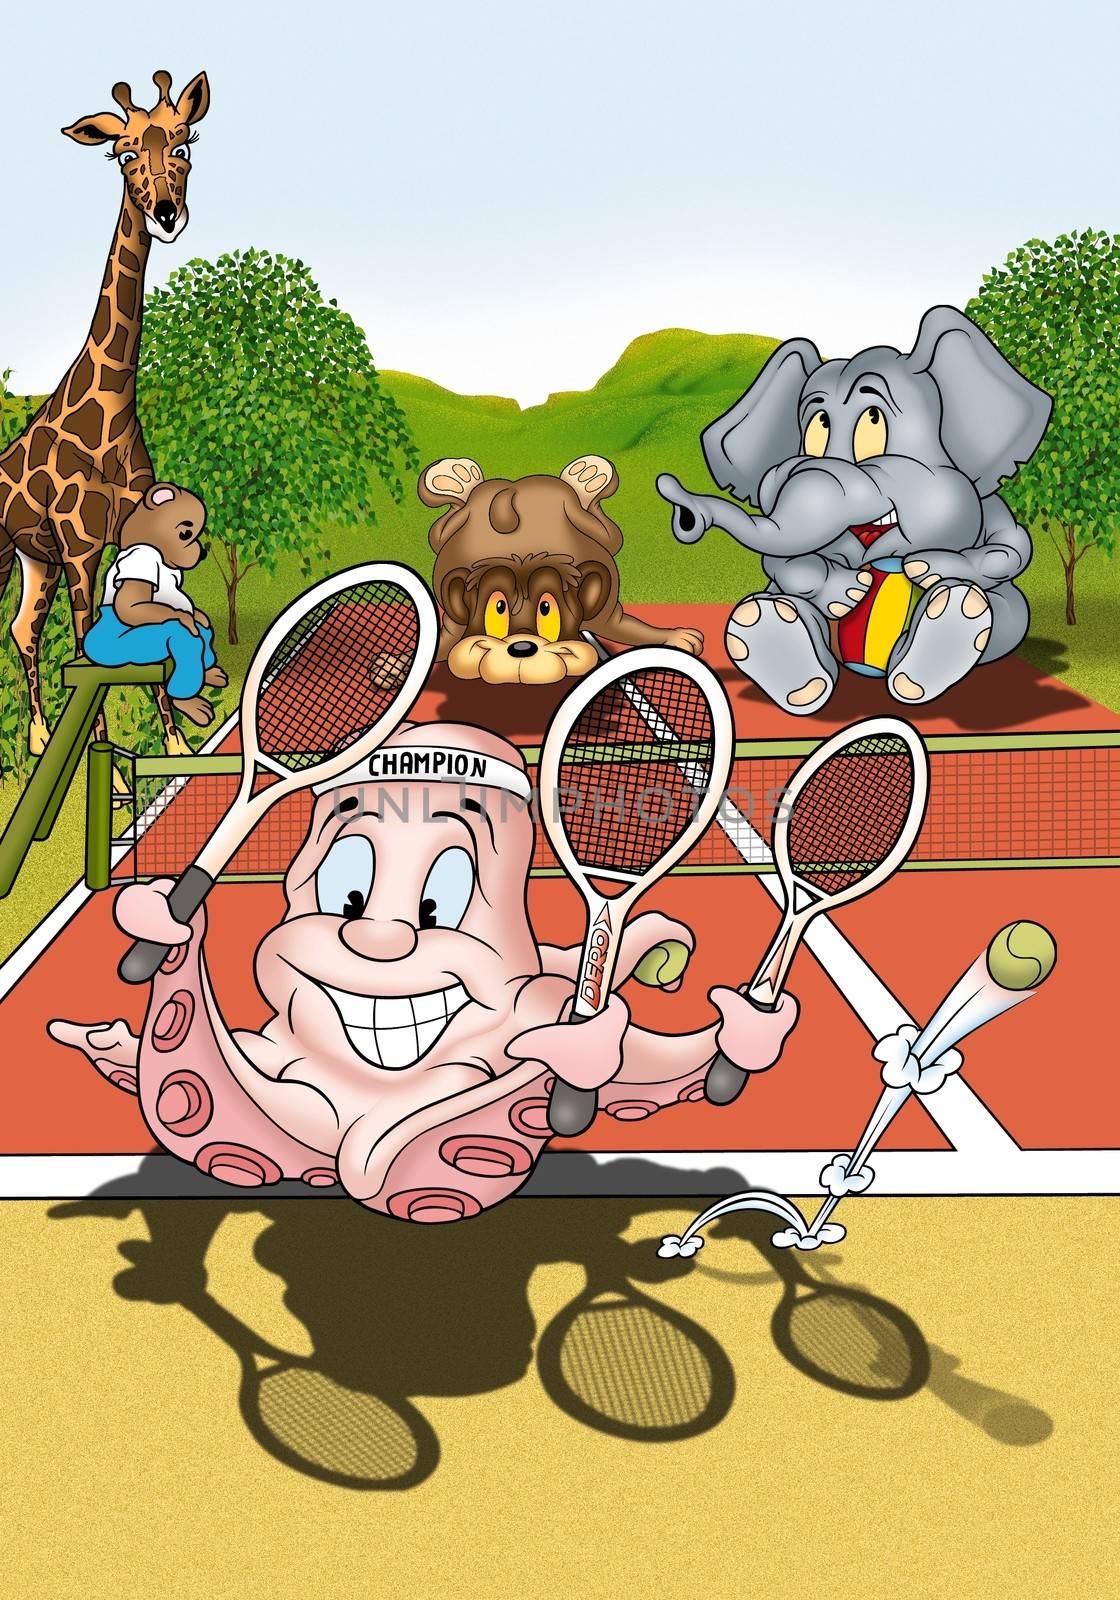 Octopus Tennis Player by illustratorCZ